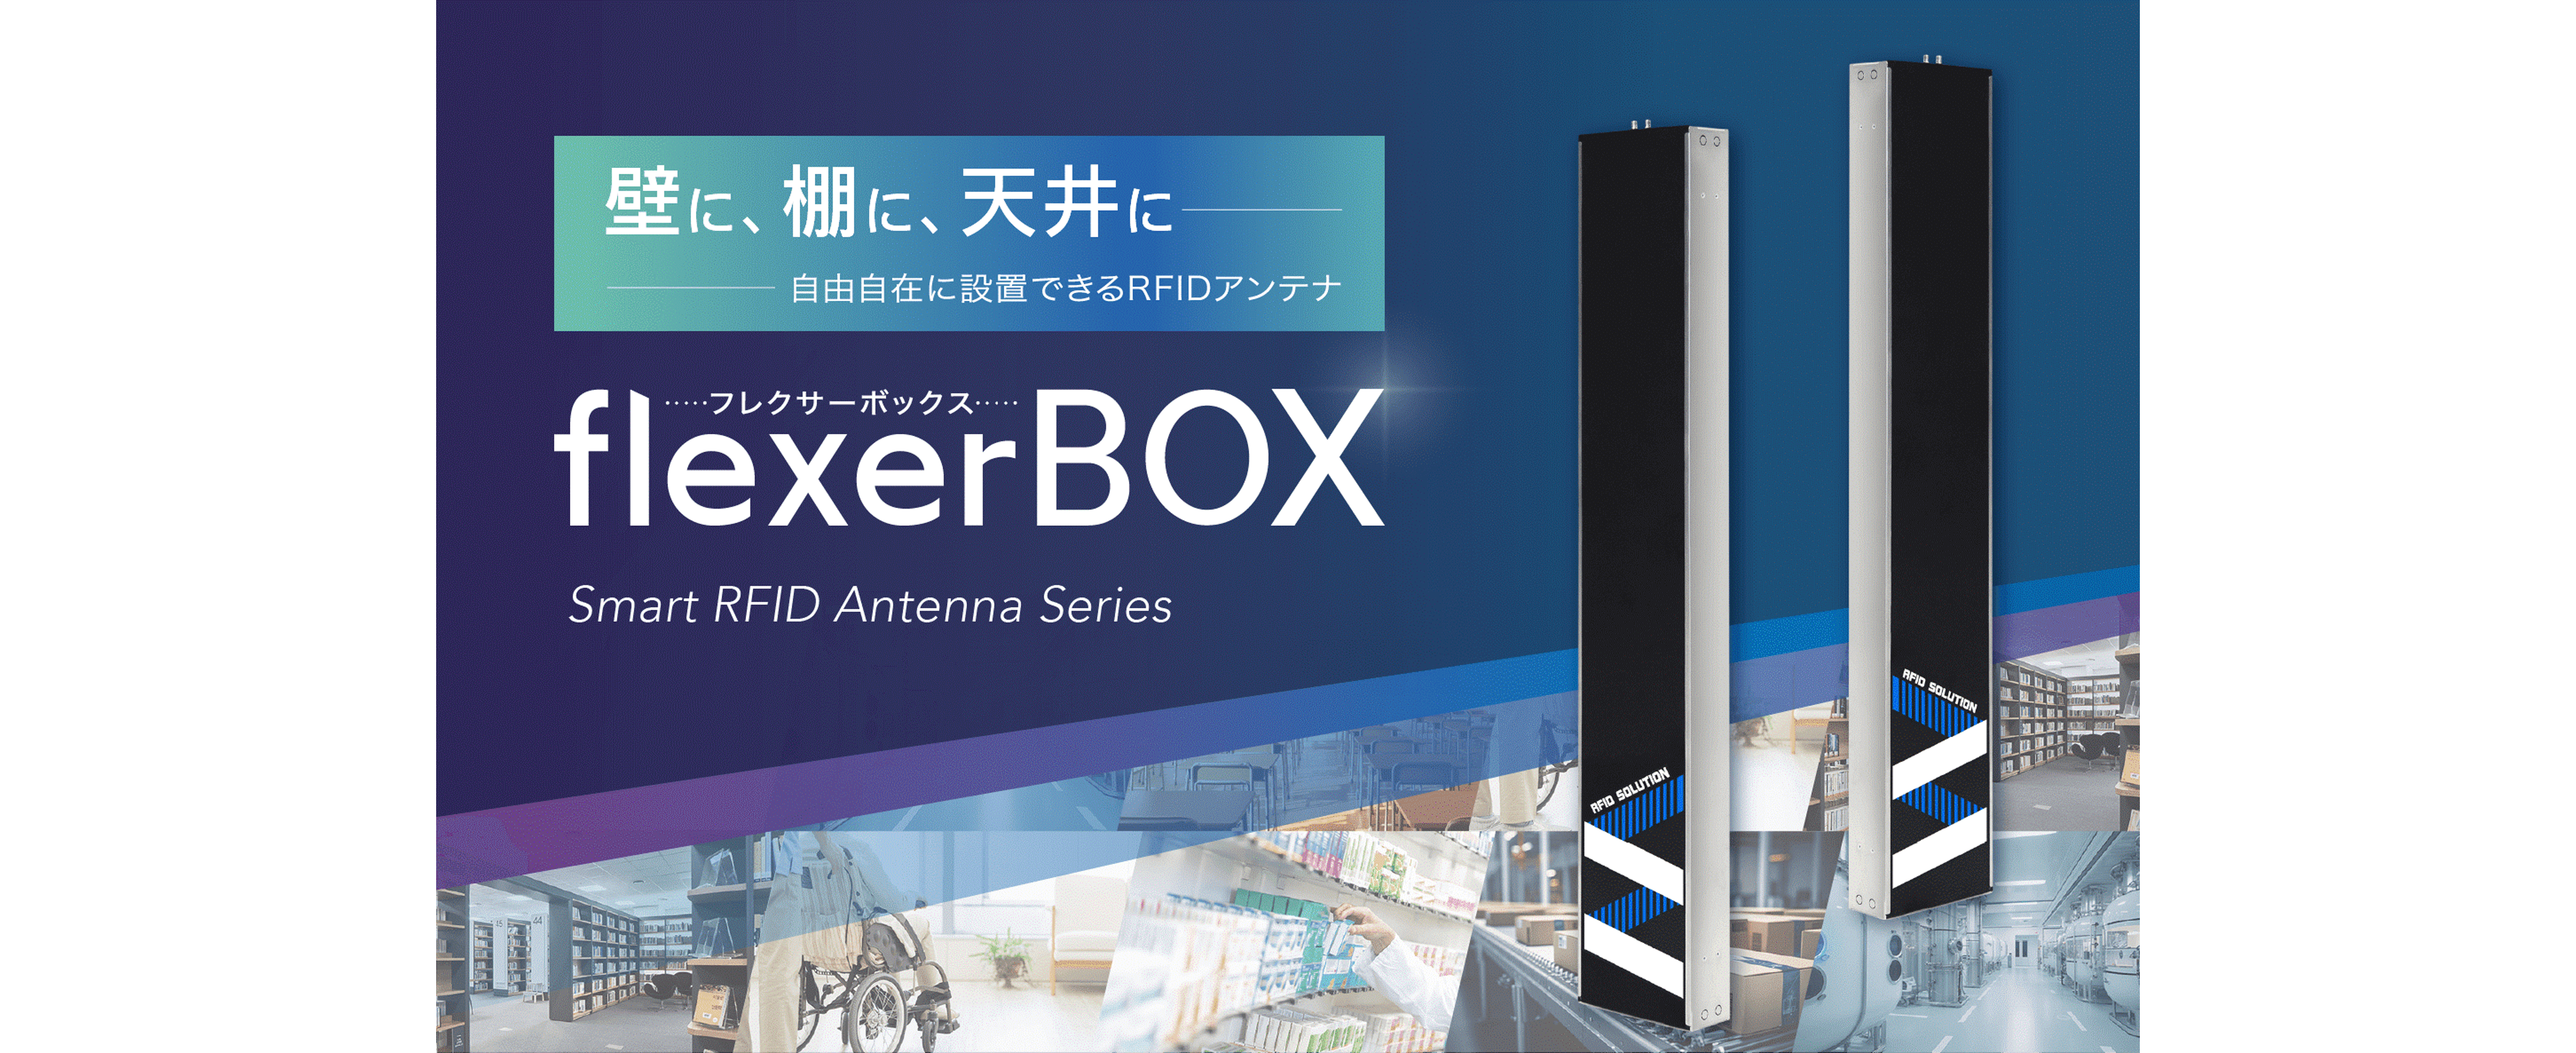 flexerBOX01.png